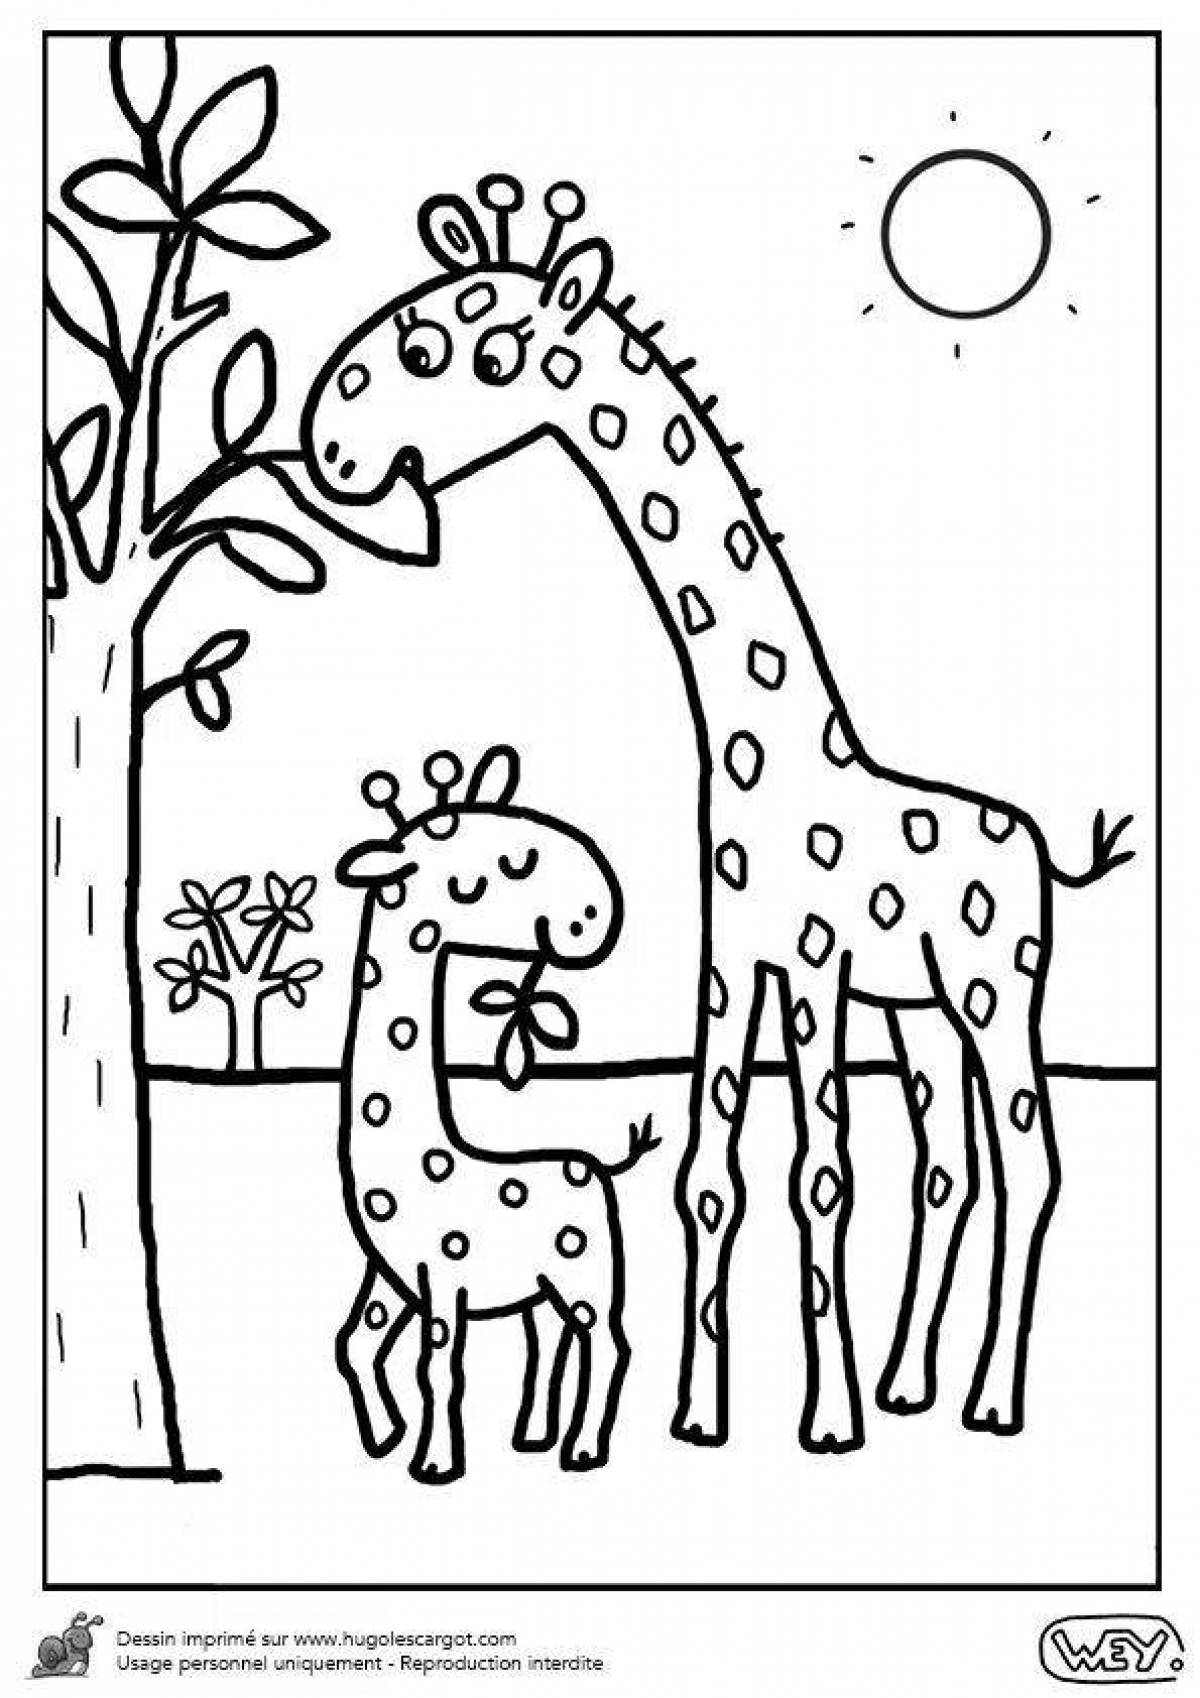 Cute giraffe coloring book for preschoolers